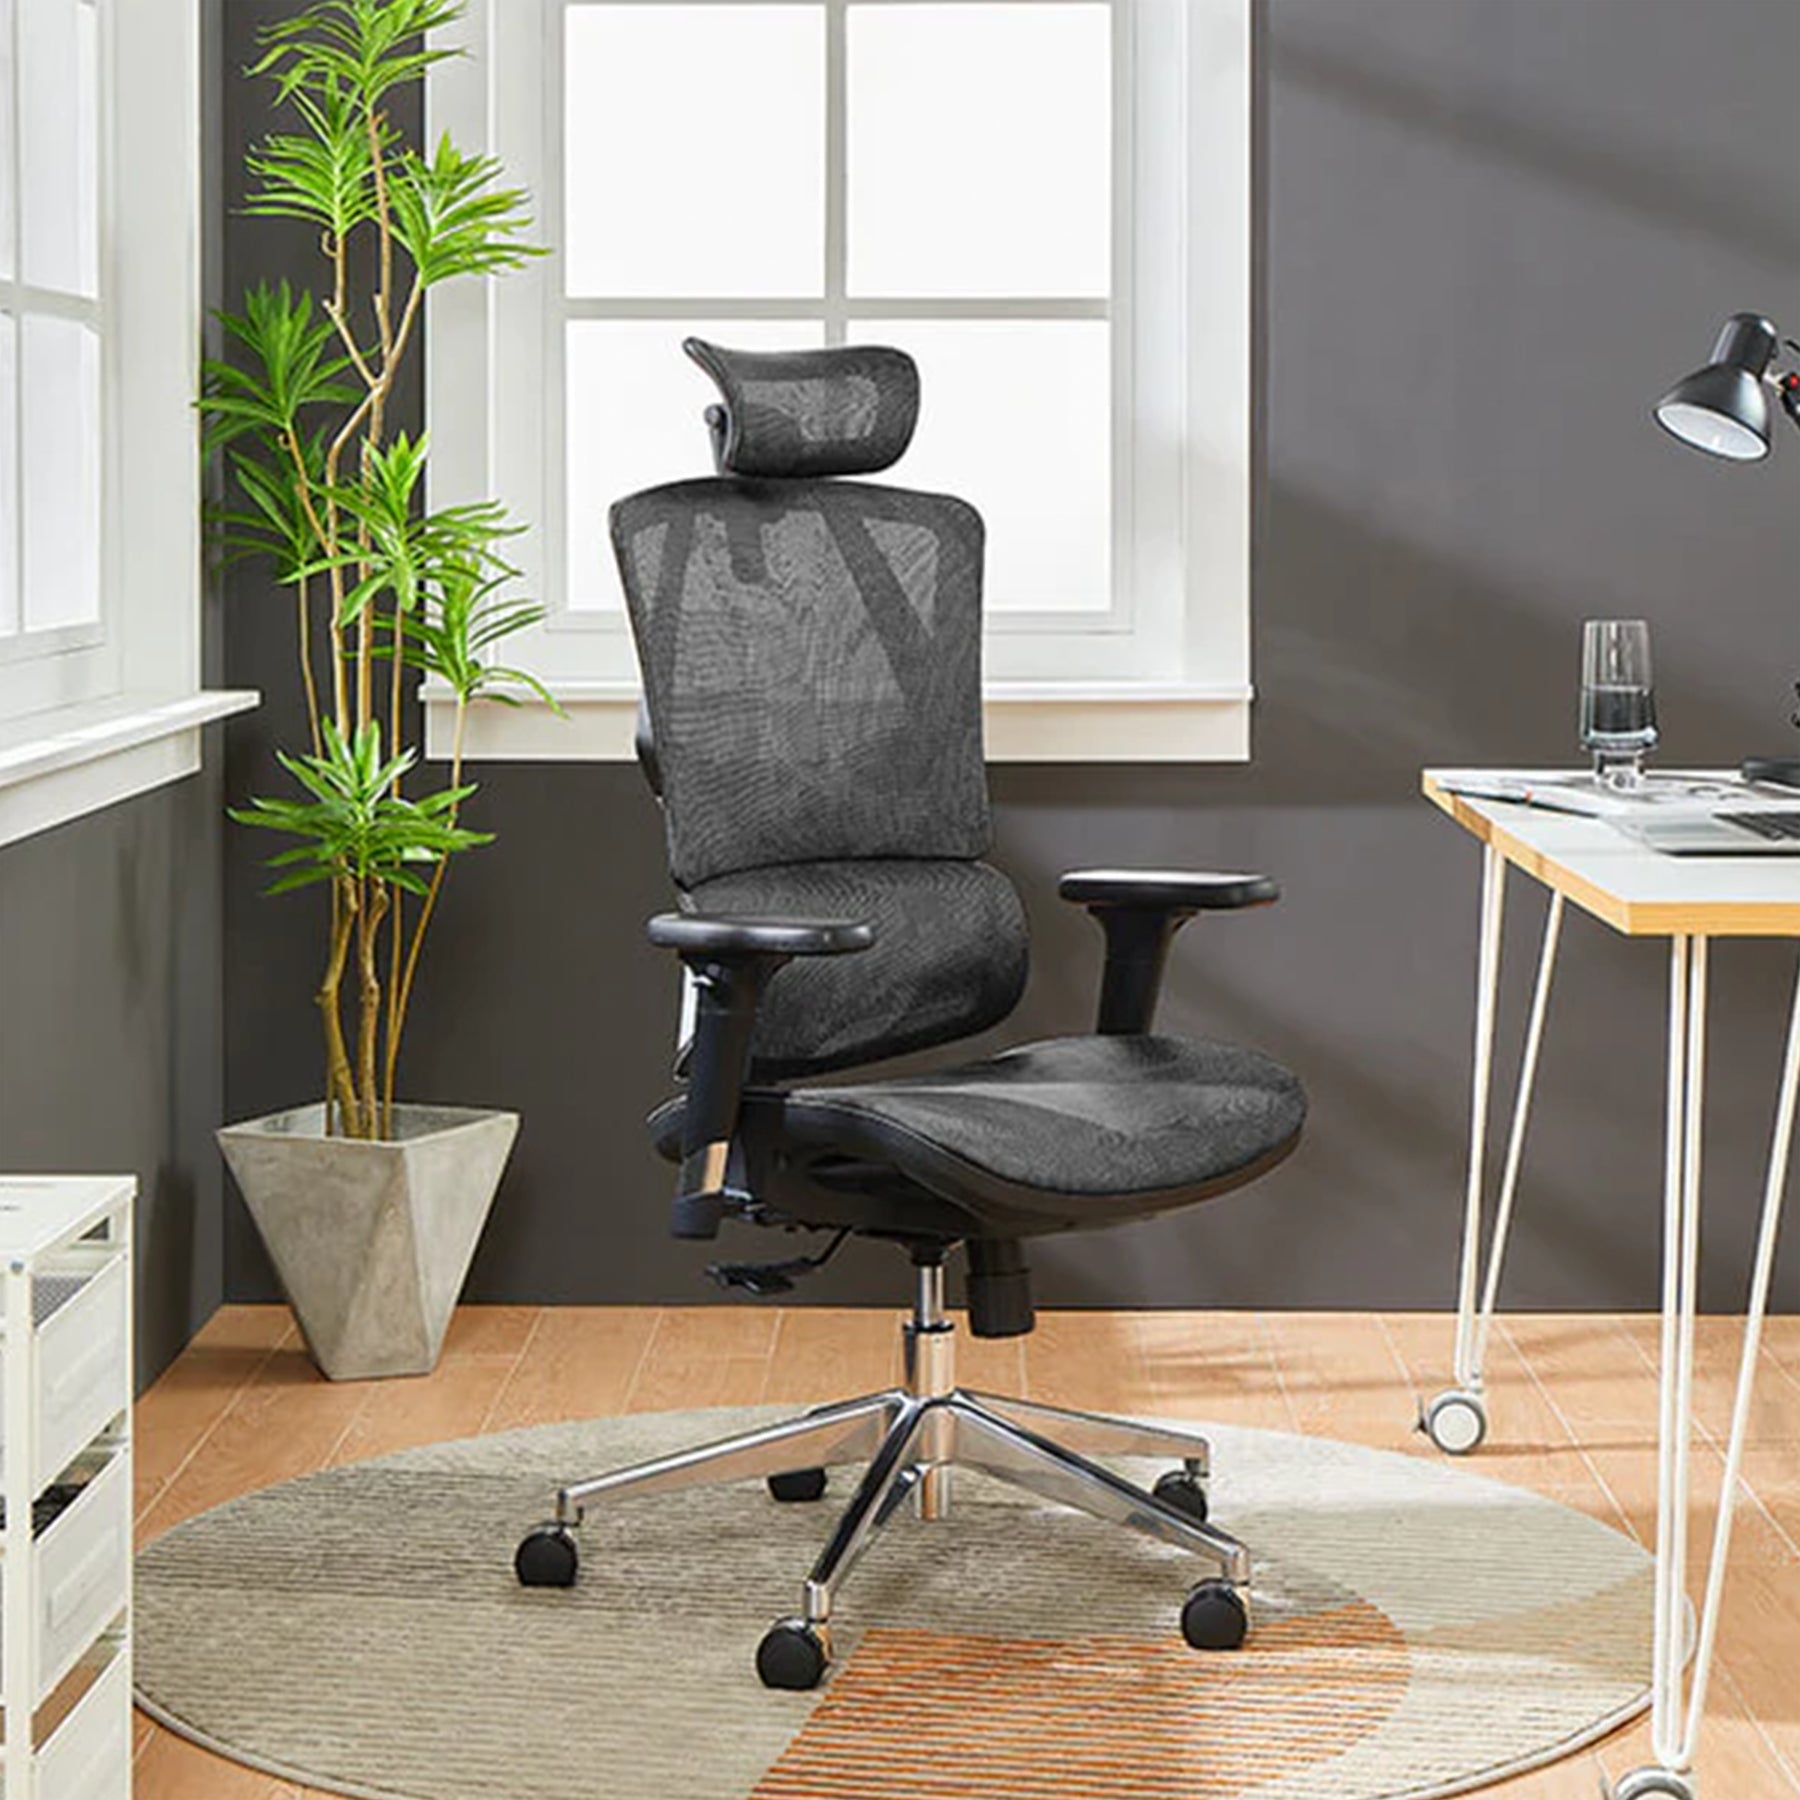 Sihoo M90C Ergonomic Office Chair with Adjustable Lumbar Support Grey